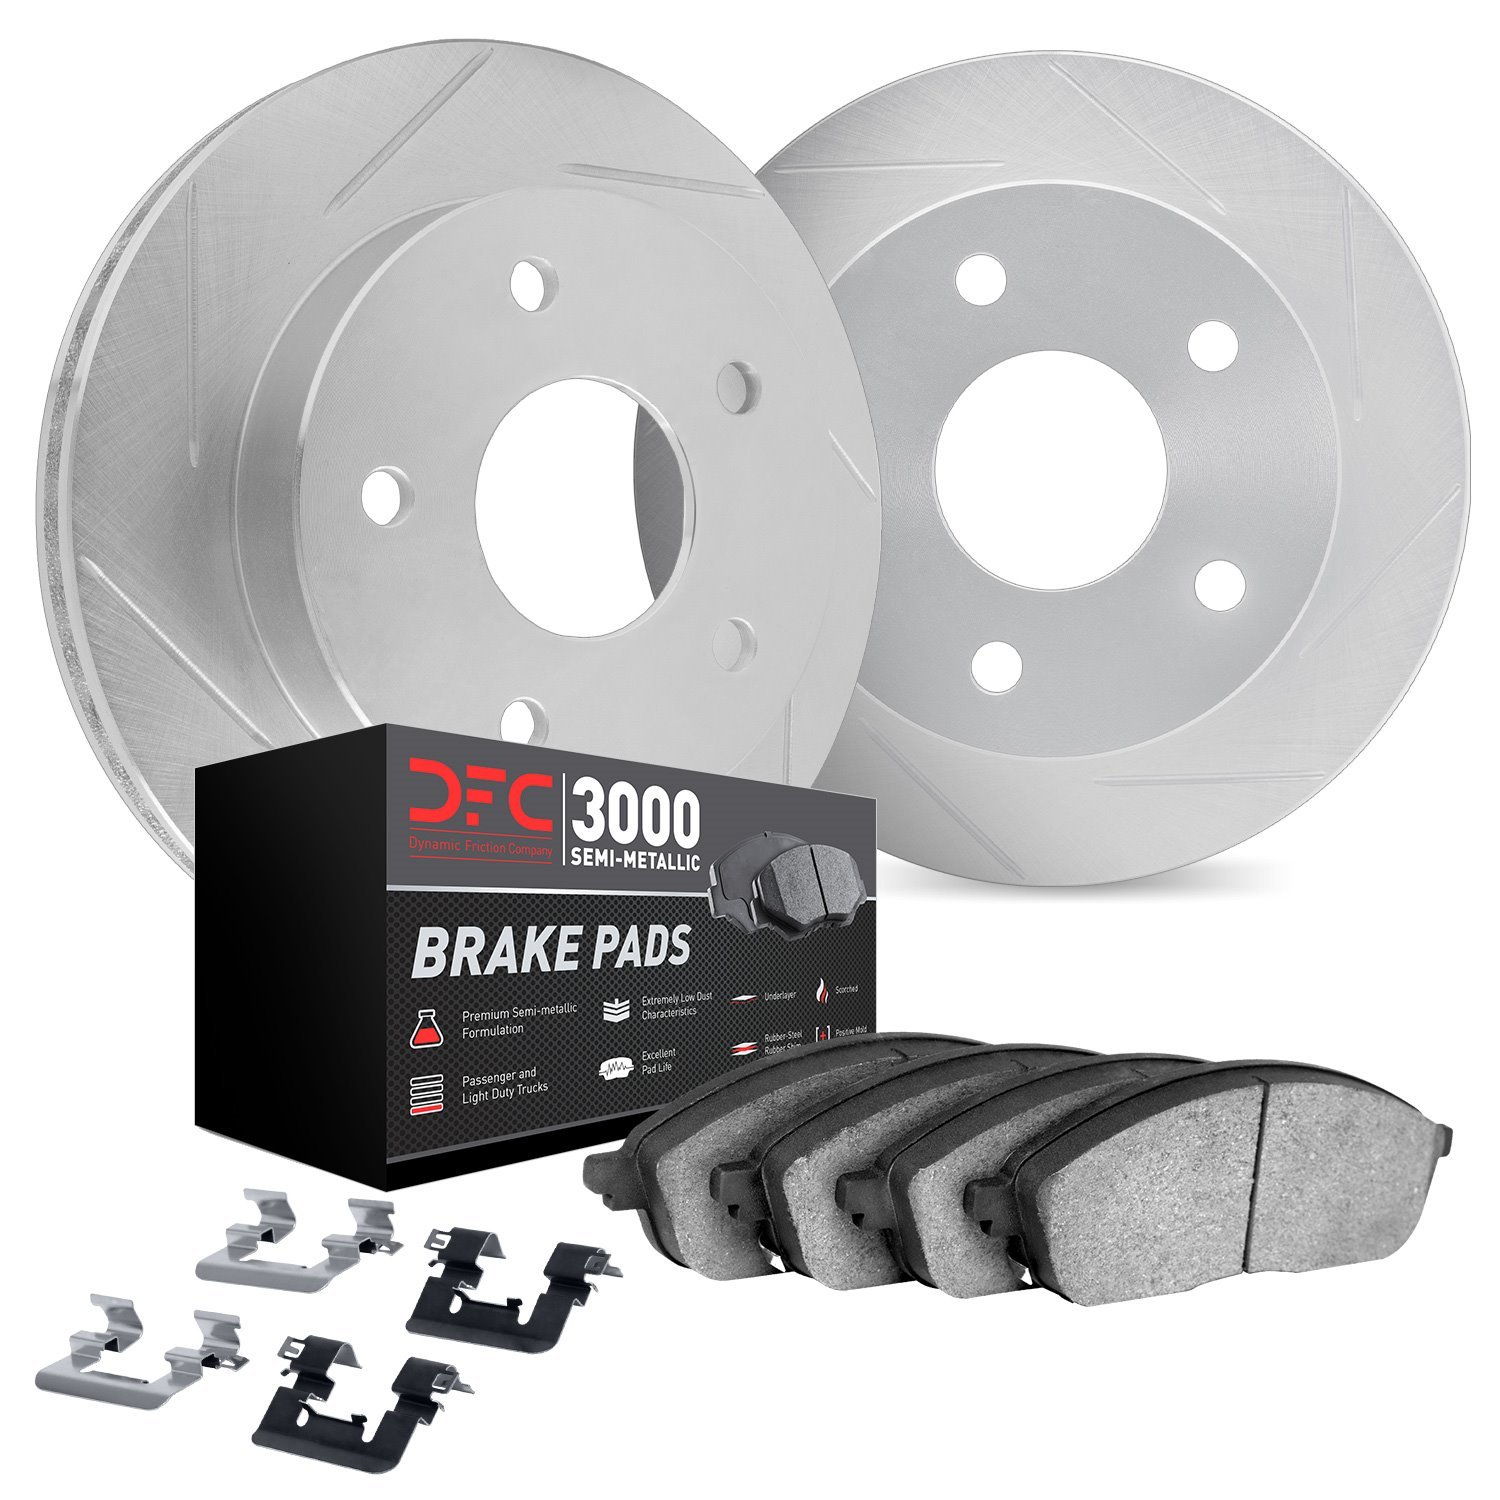 5112-76163 Slotted Brake Rotors with 3000-Series Semi-Metallic Brake Pads Kit & Hardware [Silver], Fits Select Lexus/Toyota/Scio